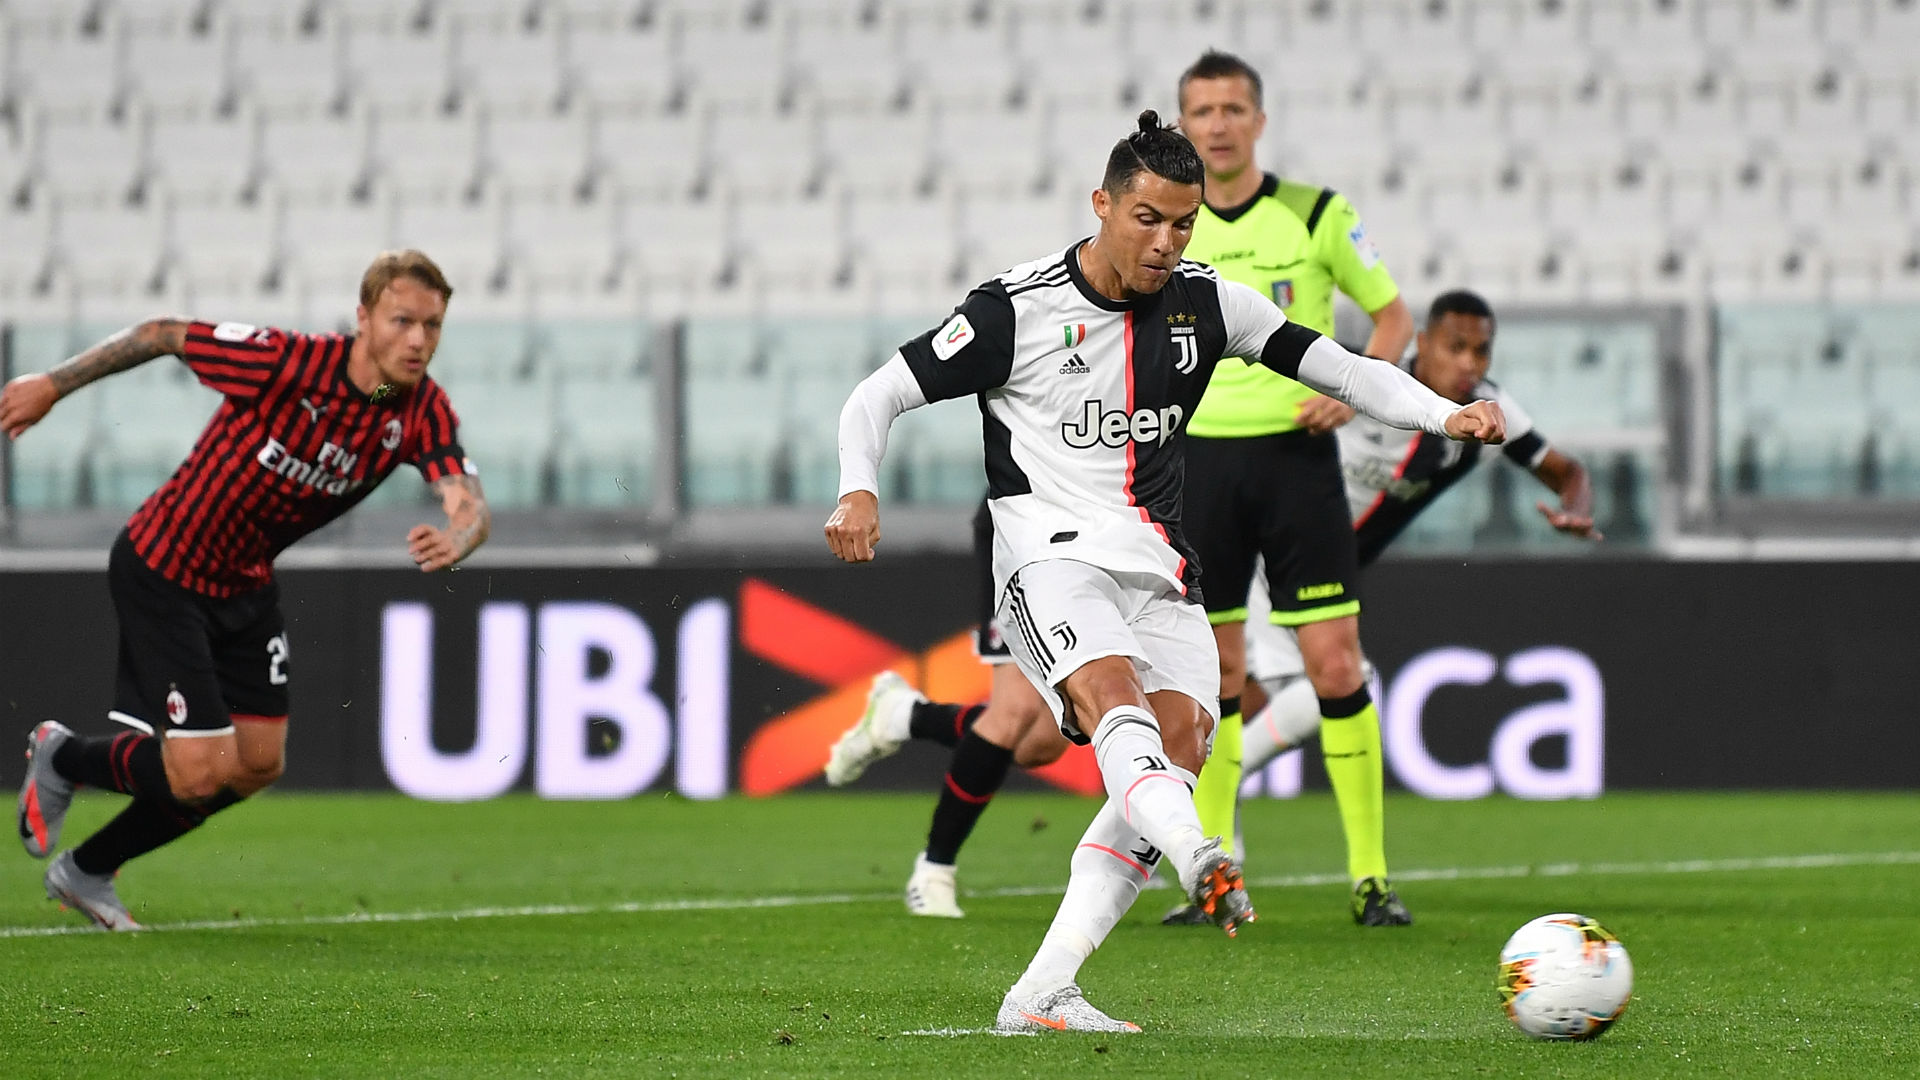 'Even the greatest miss penalties' – Bonucci defends Juventus team-mate Ronaldo